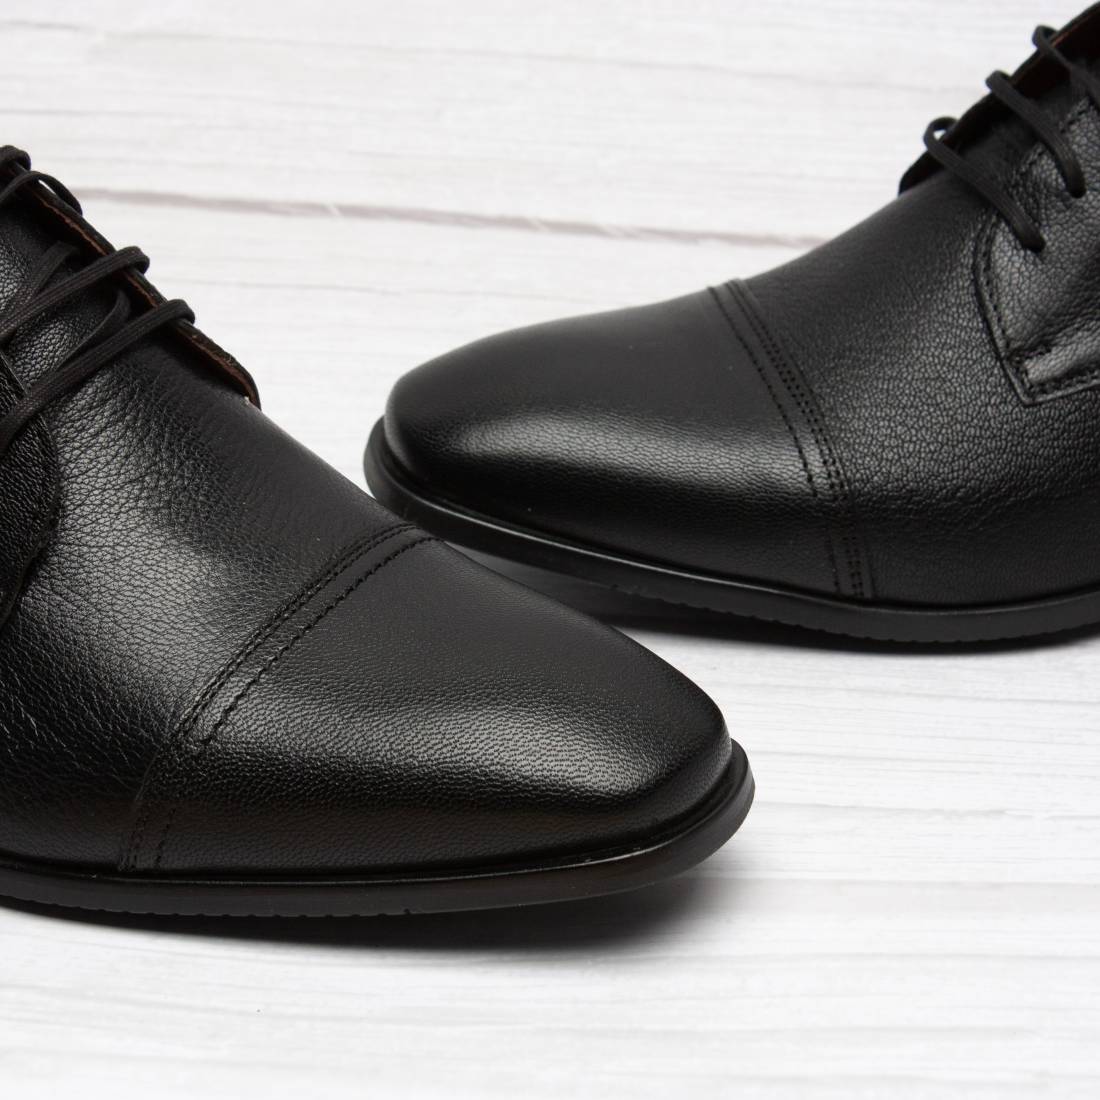 Men's shoes - Borovo